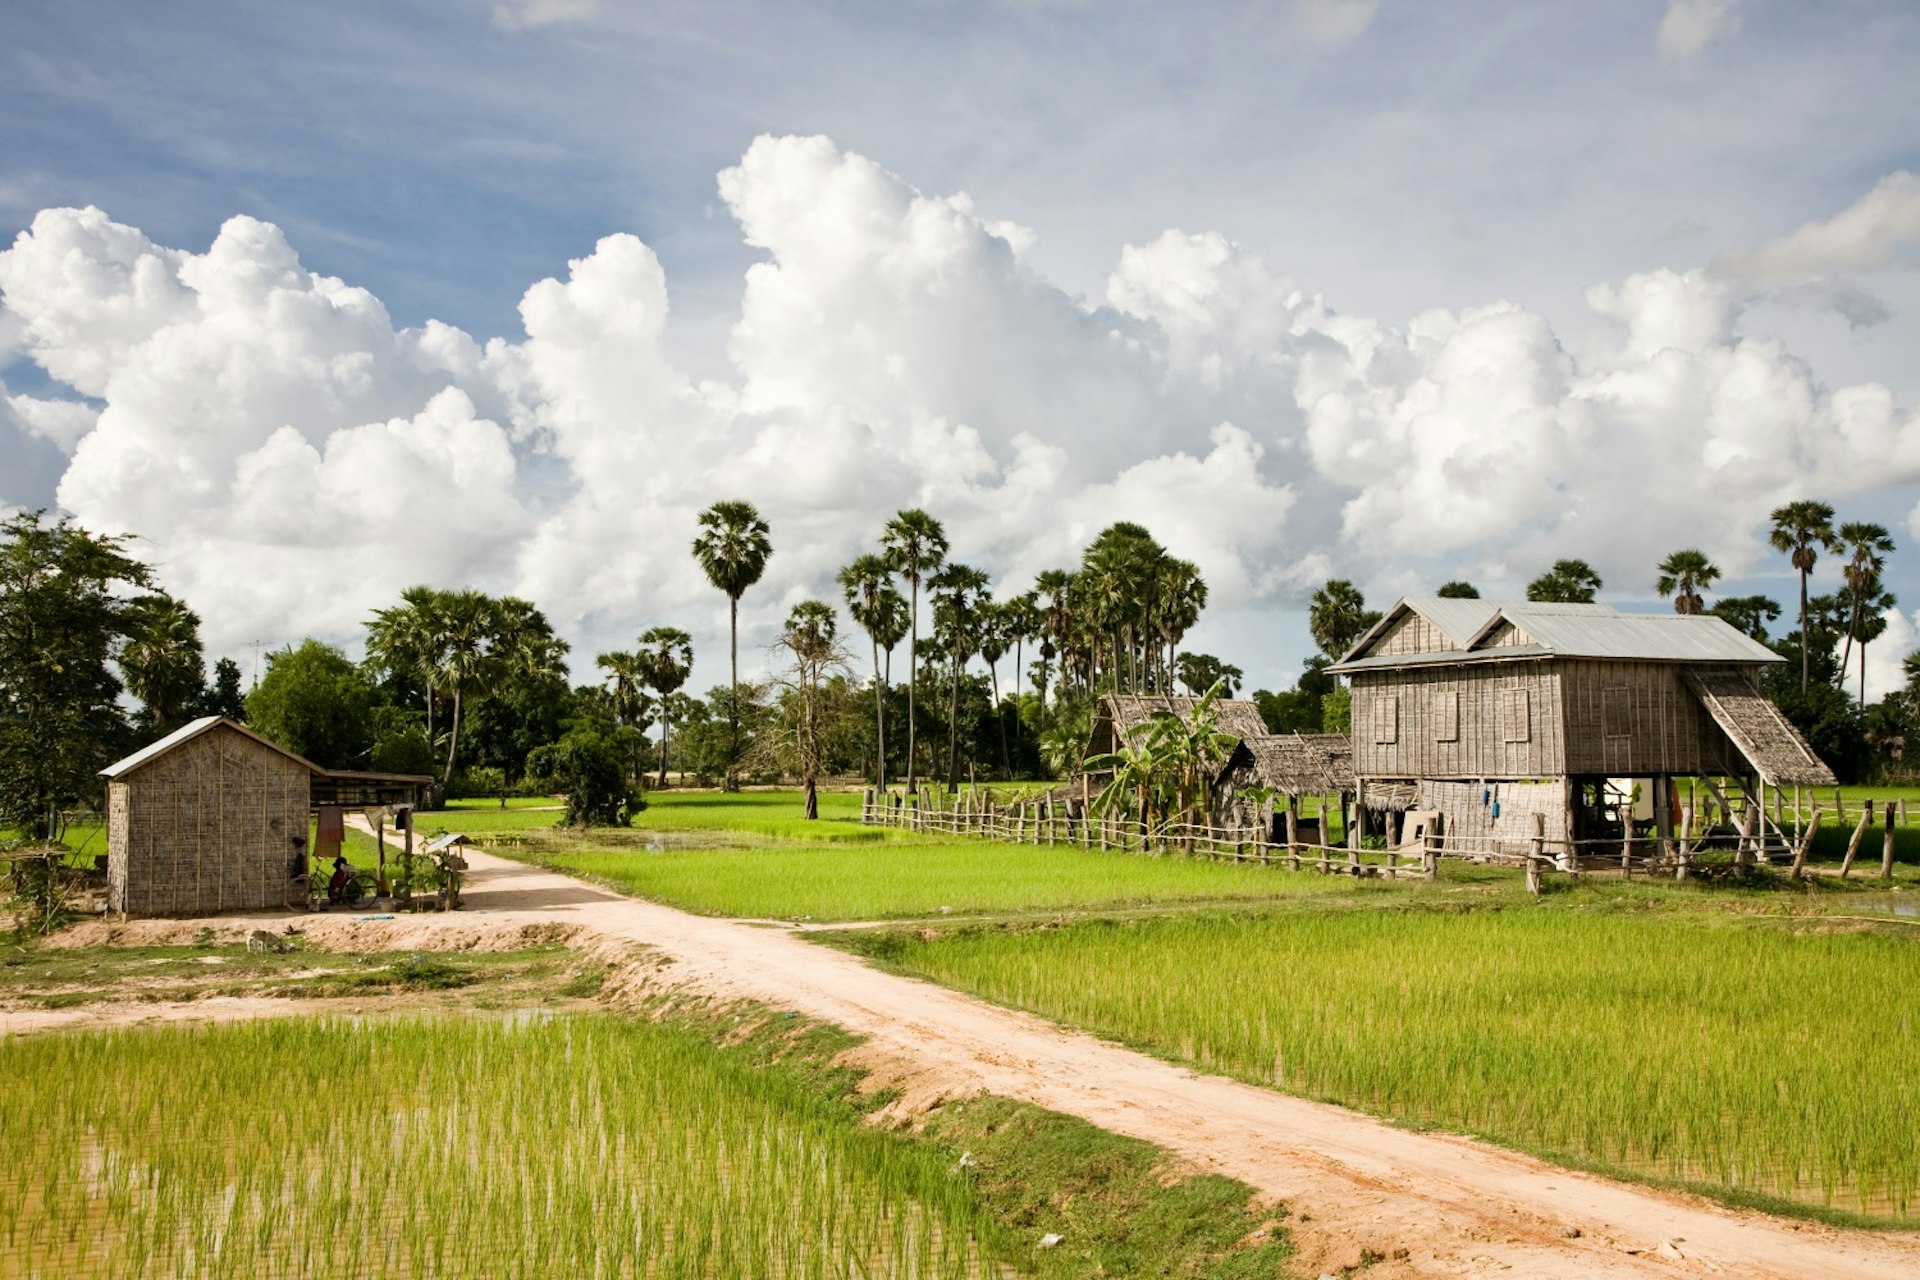 Rural village outside Battambang